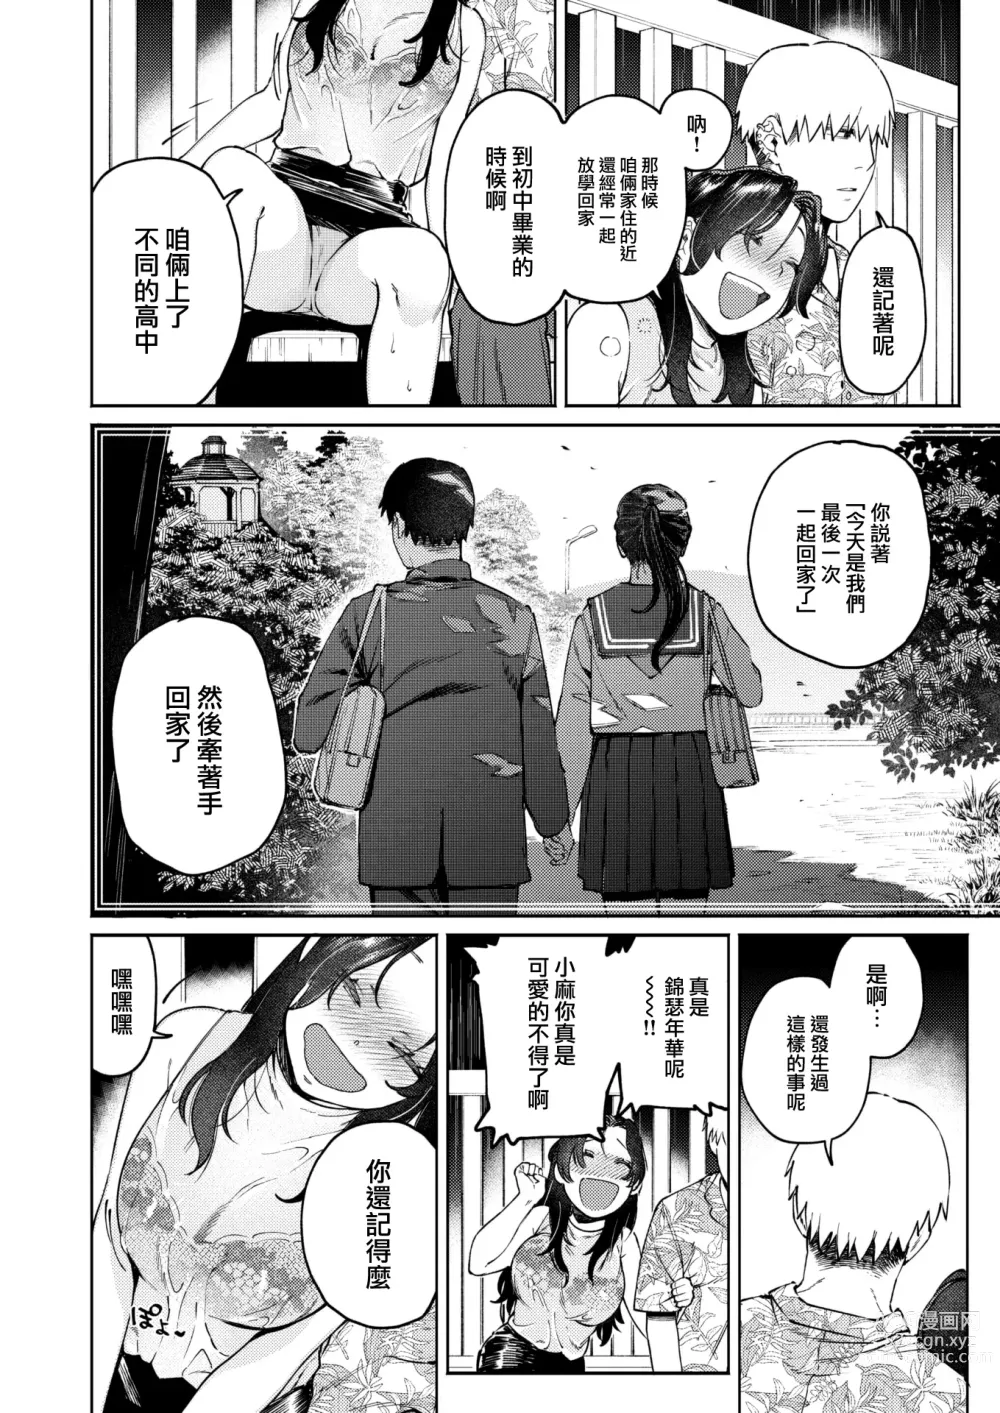 Page 7 of manga Gazebo nite - Under a Gazebo